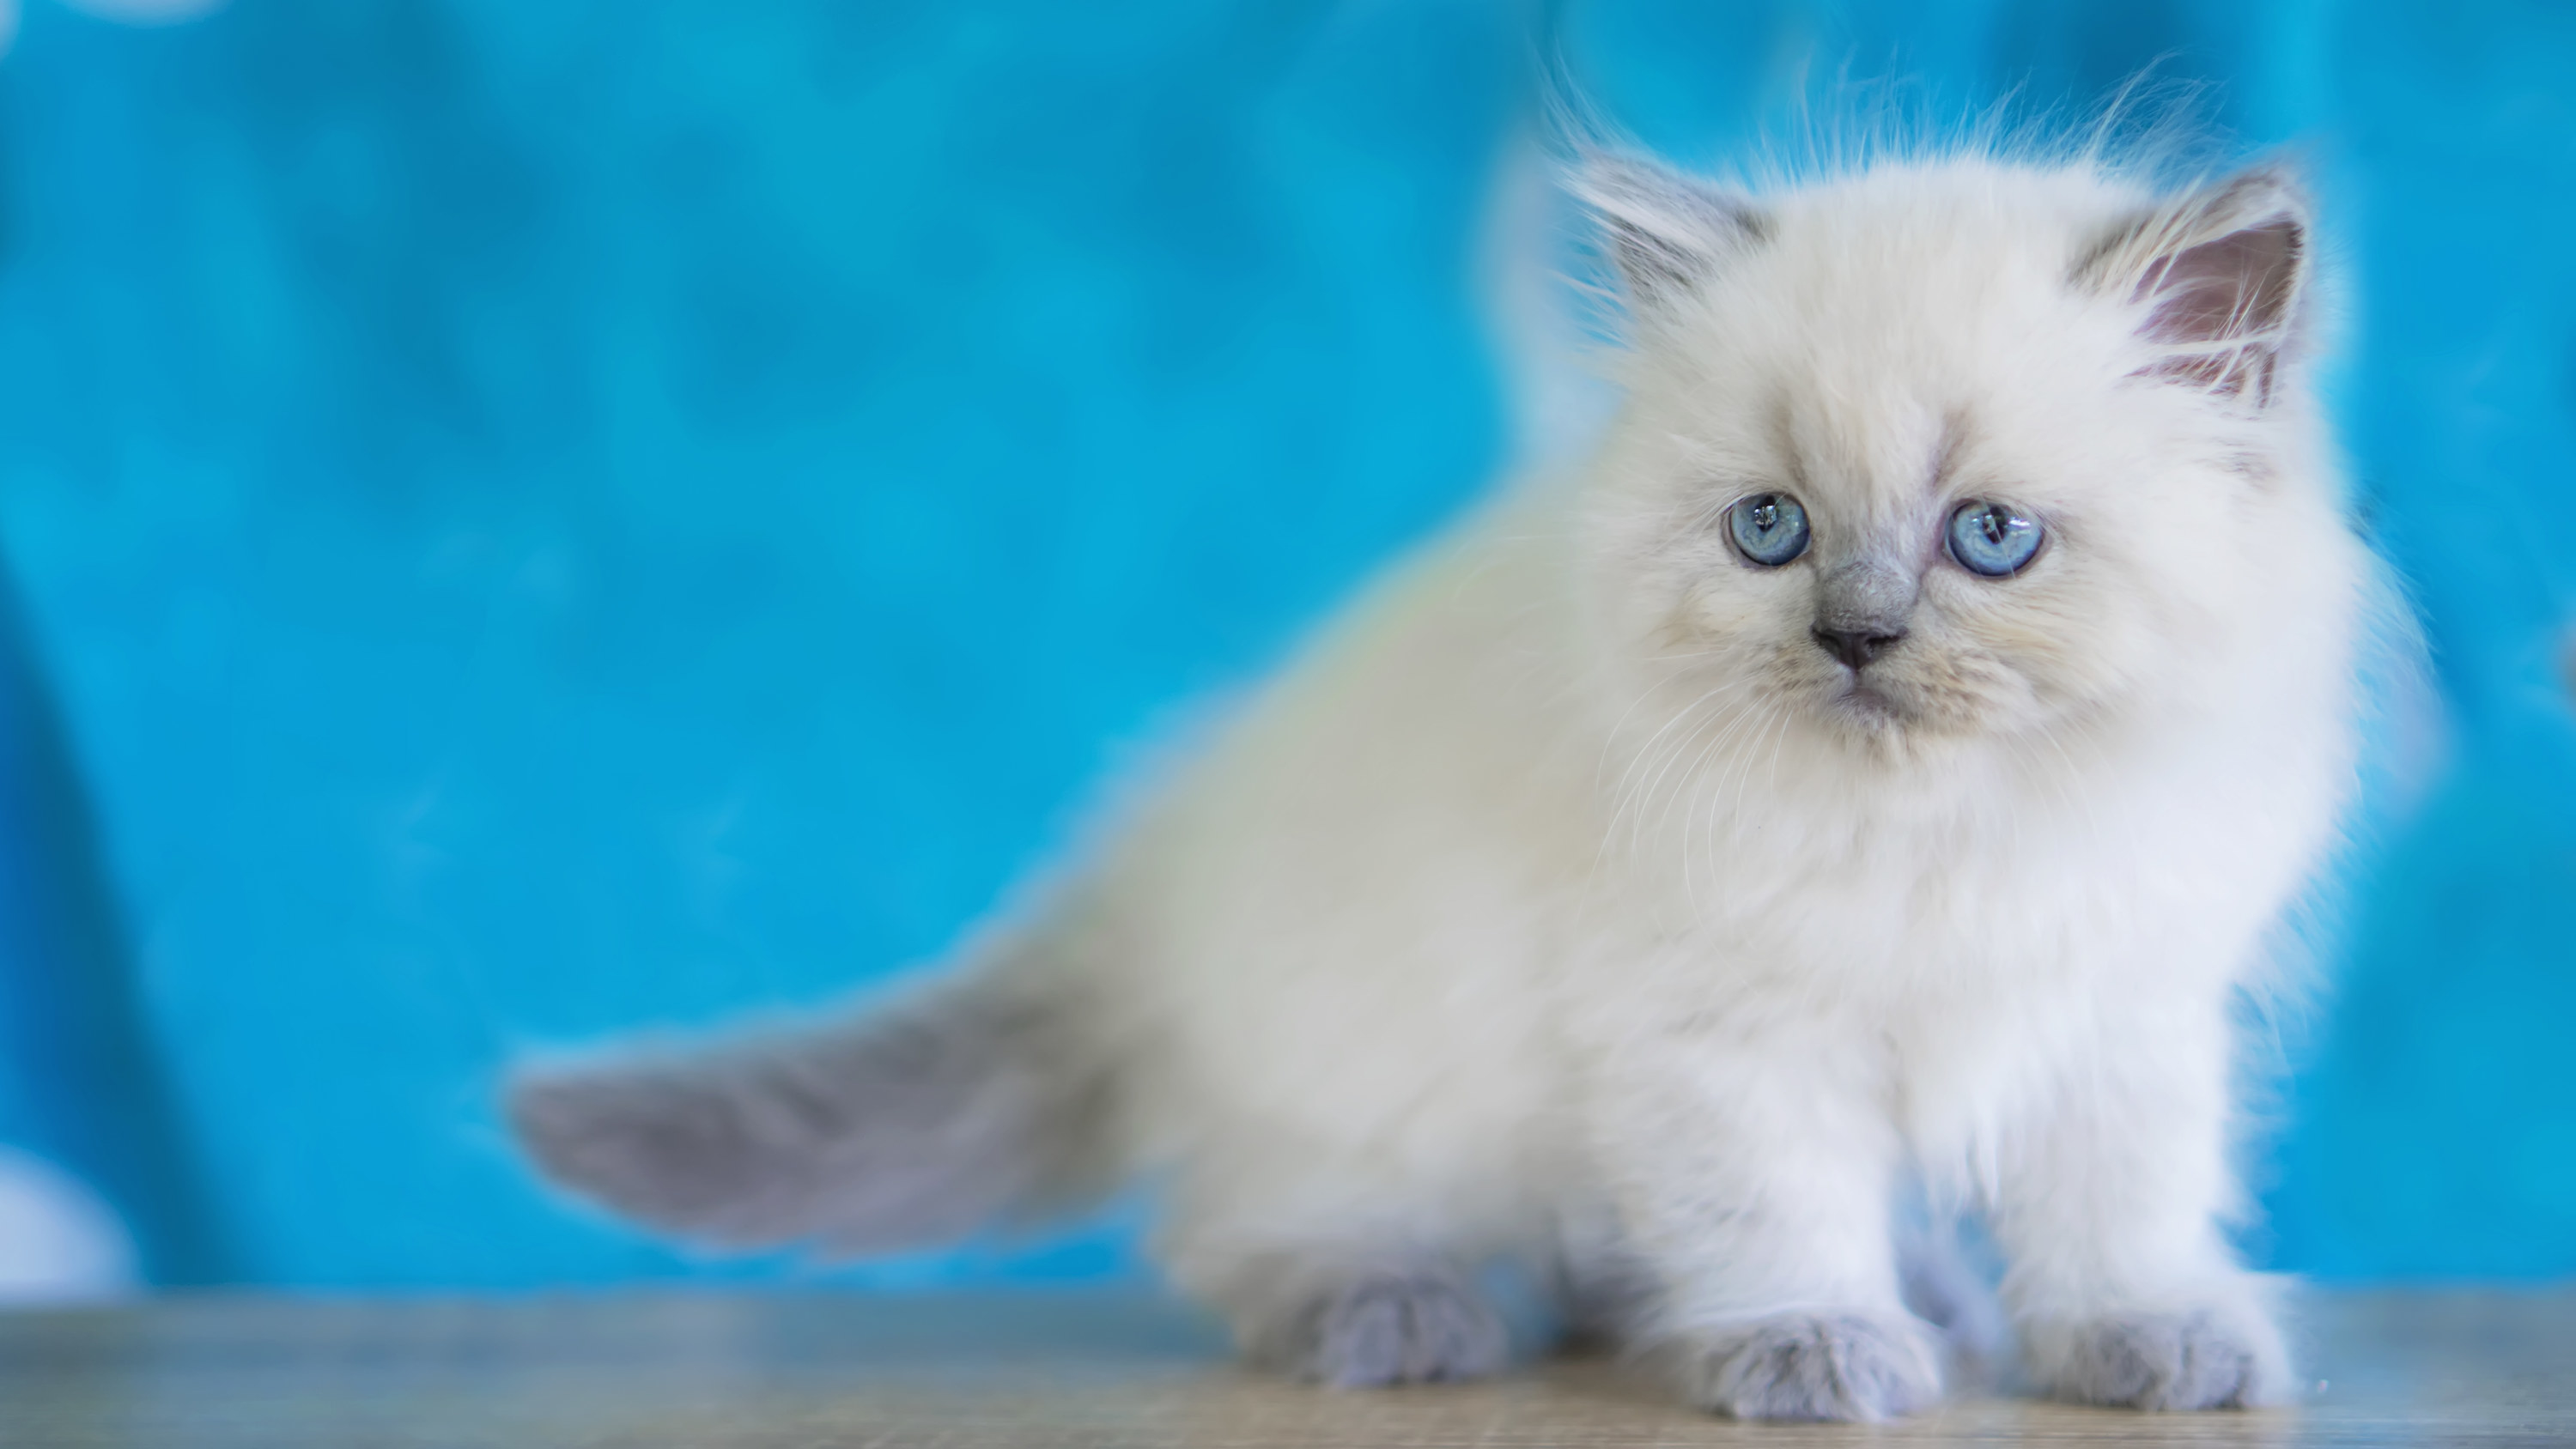 Photo of a tiny white baby kitten